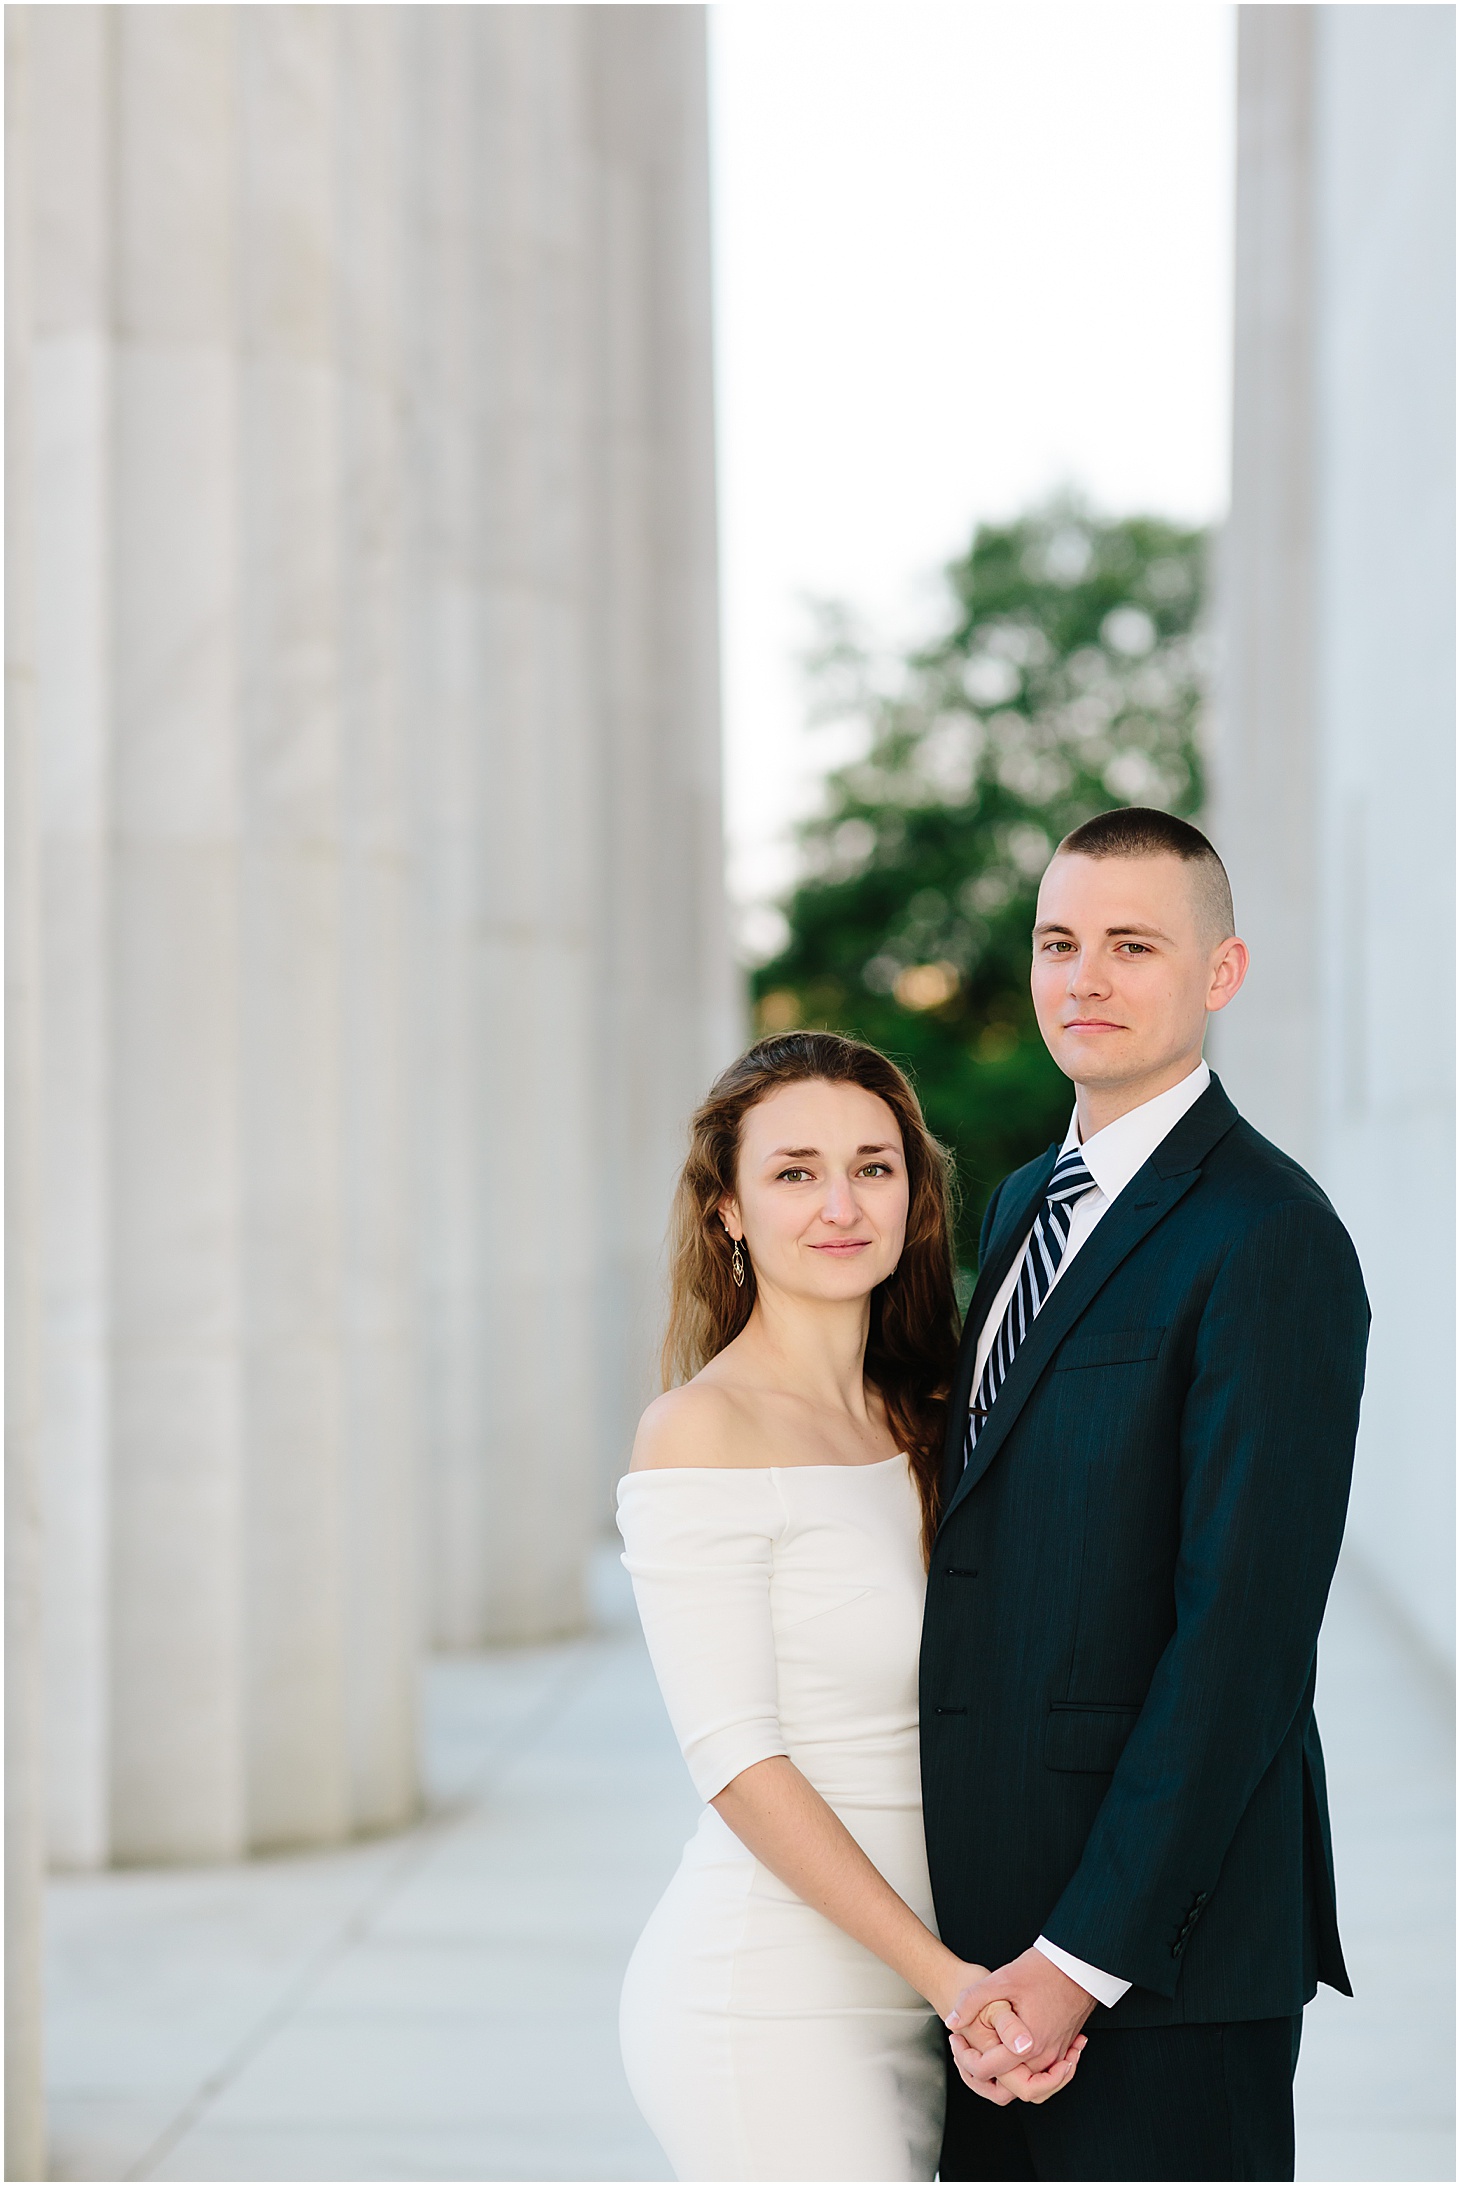 Elegant Engagement Portraits in DC, Summer Sunrise Engagement at the Lincoln Memorial, Sarah Bradshaw Photography, DC Wedding Photographer